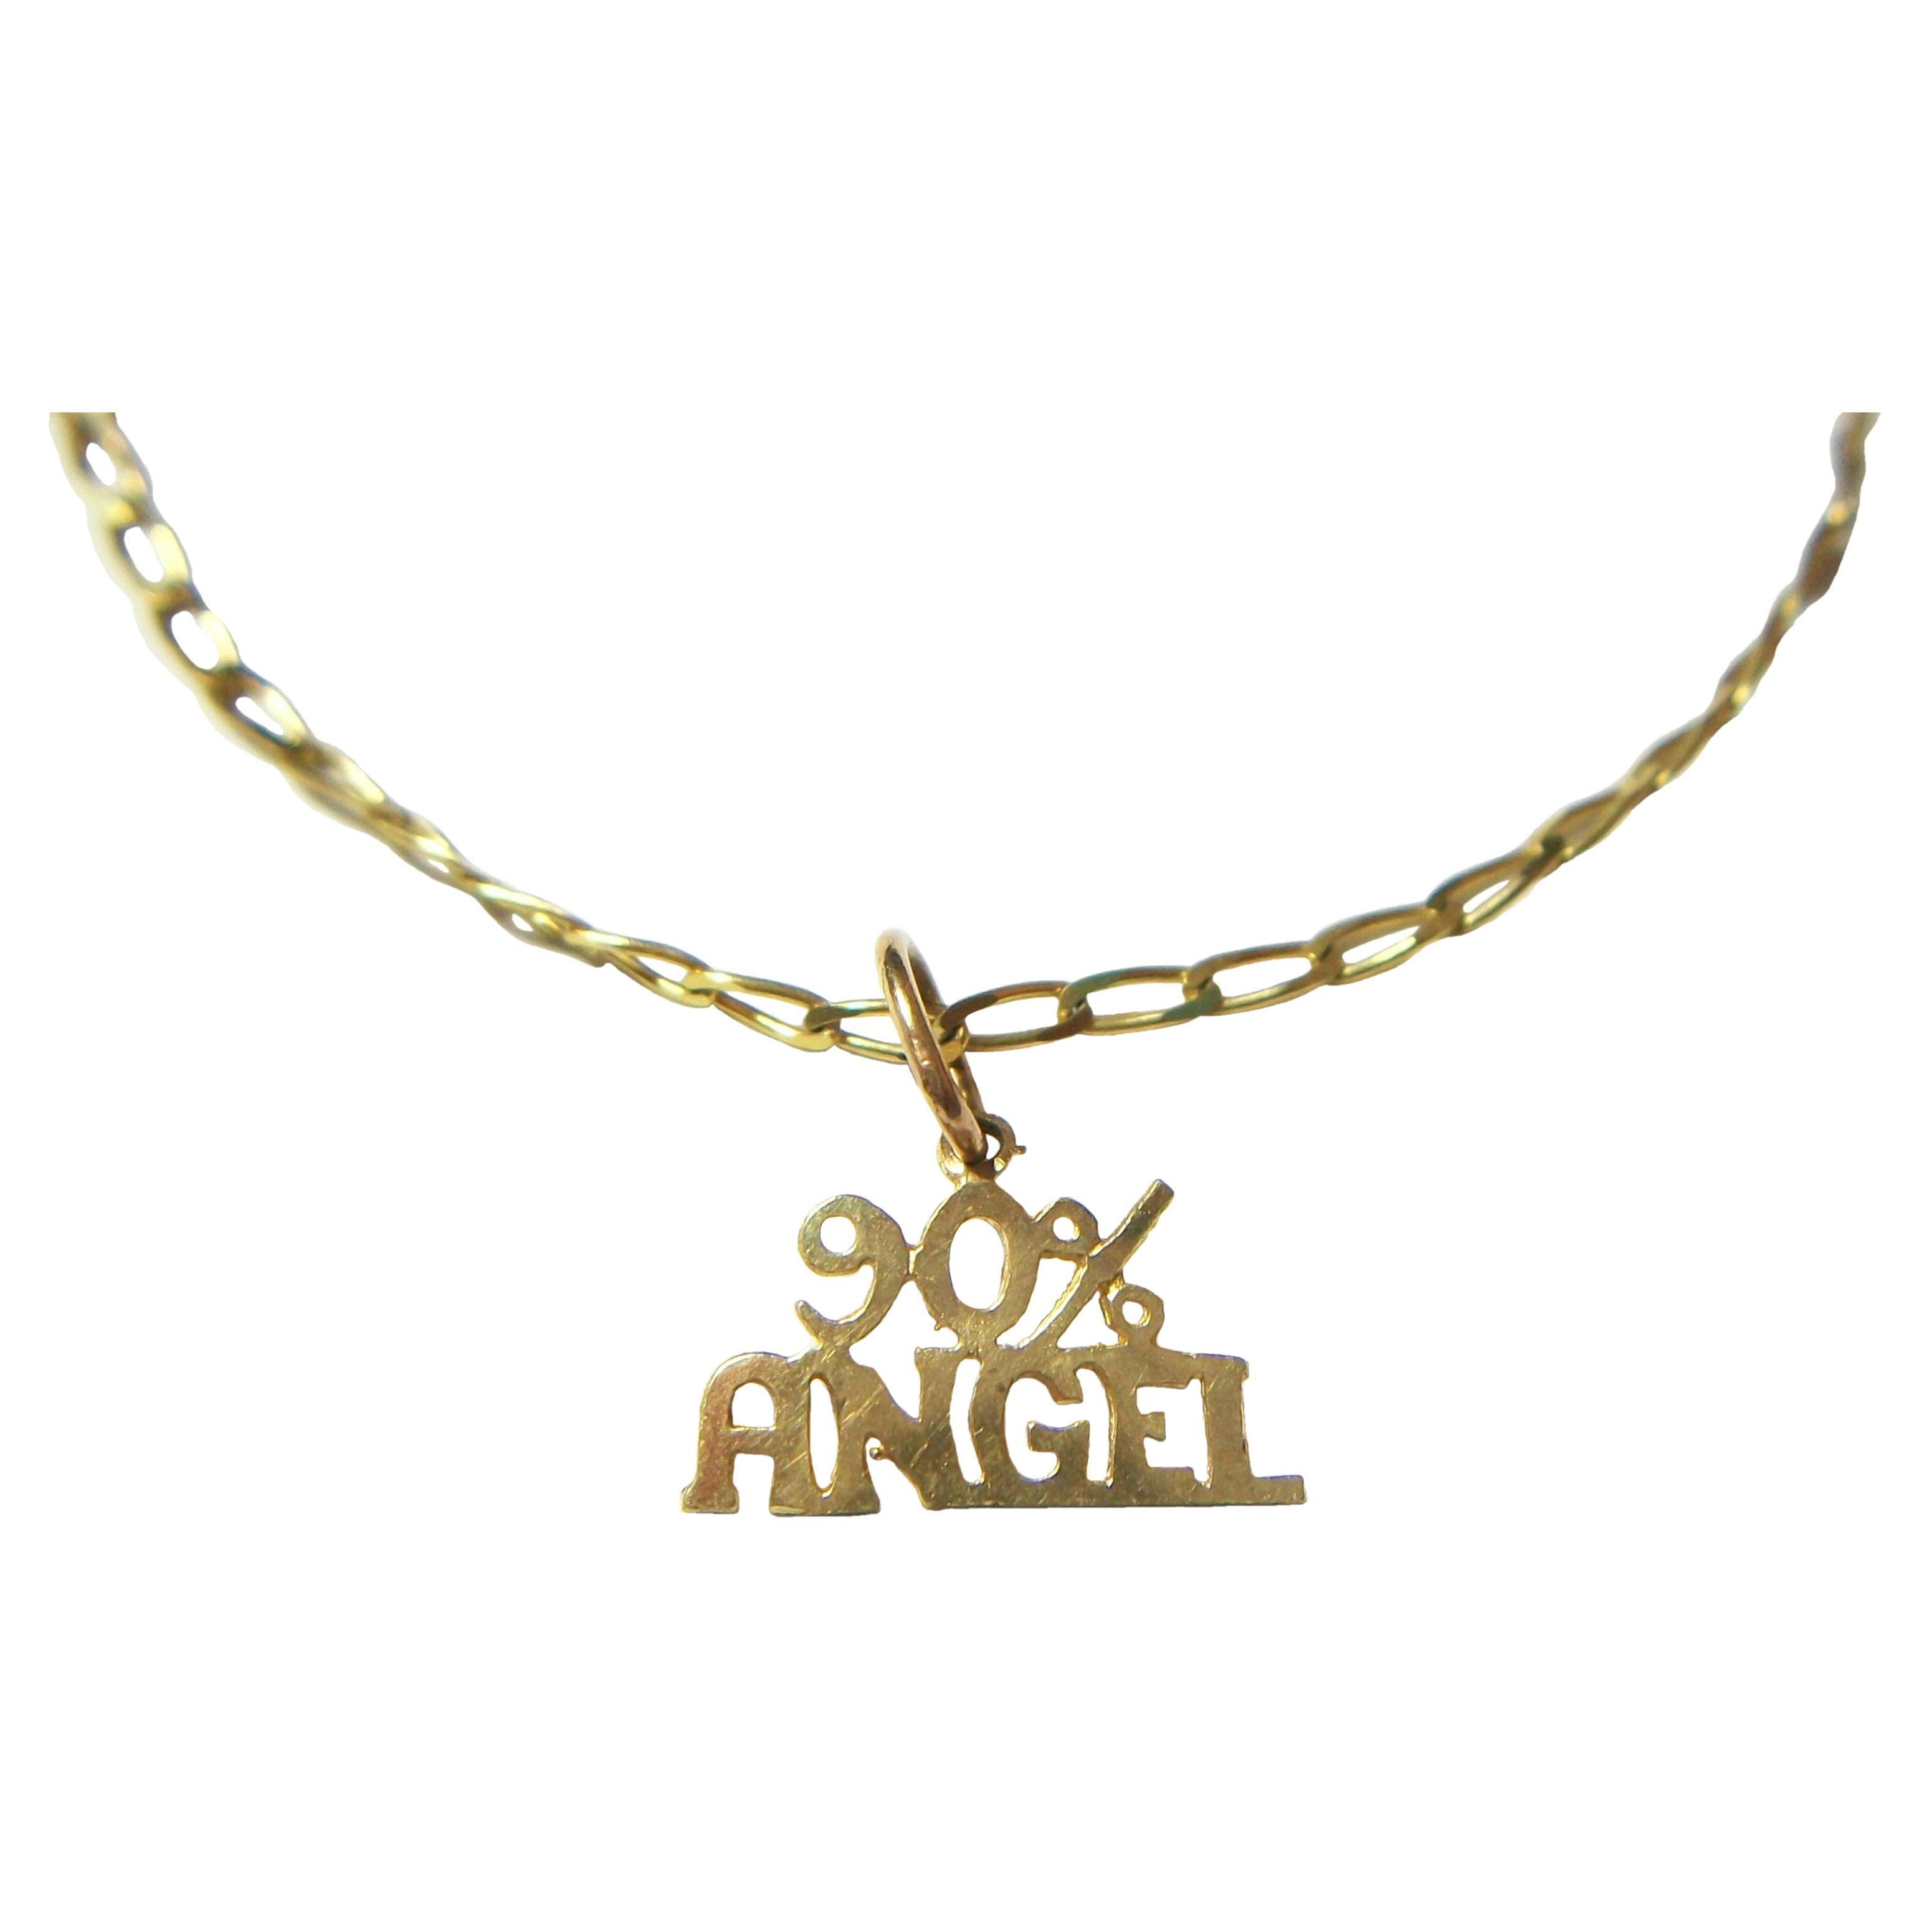 Vintage 10K Gold Chain Link Bracelet - 90% Angel Charm - Signed - Italy - 20th C For Sale